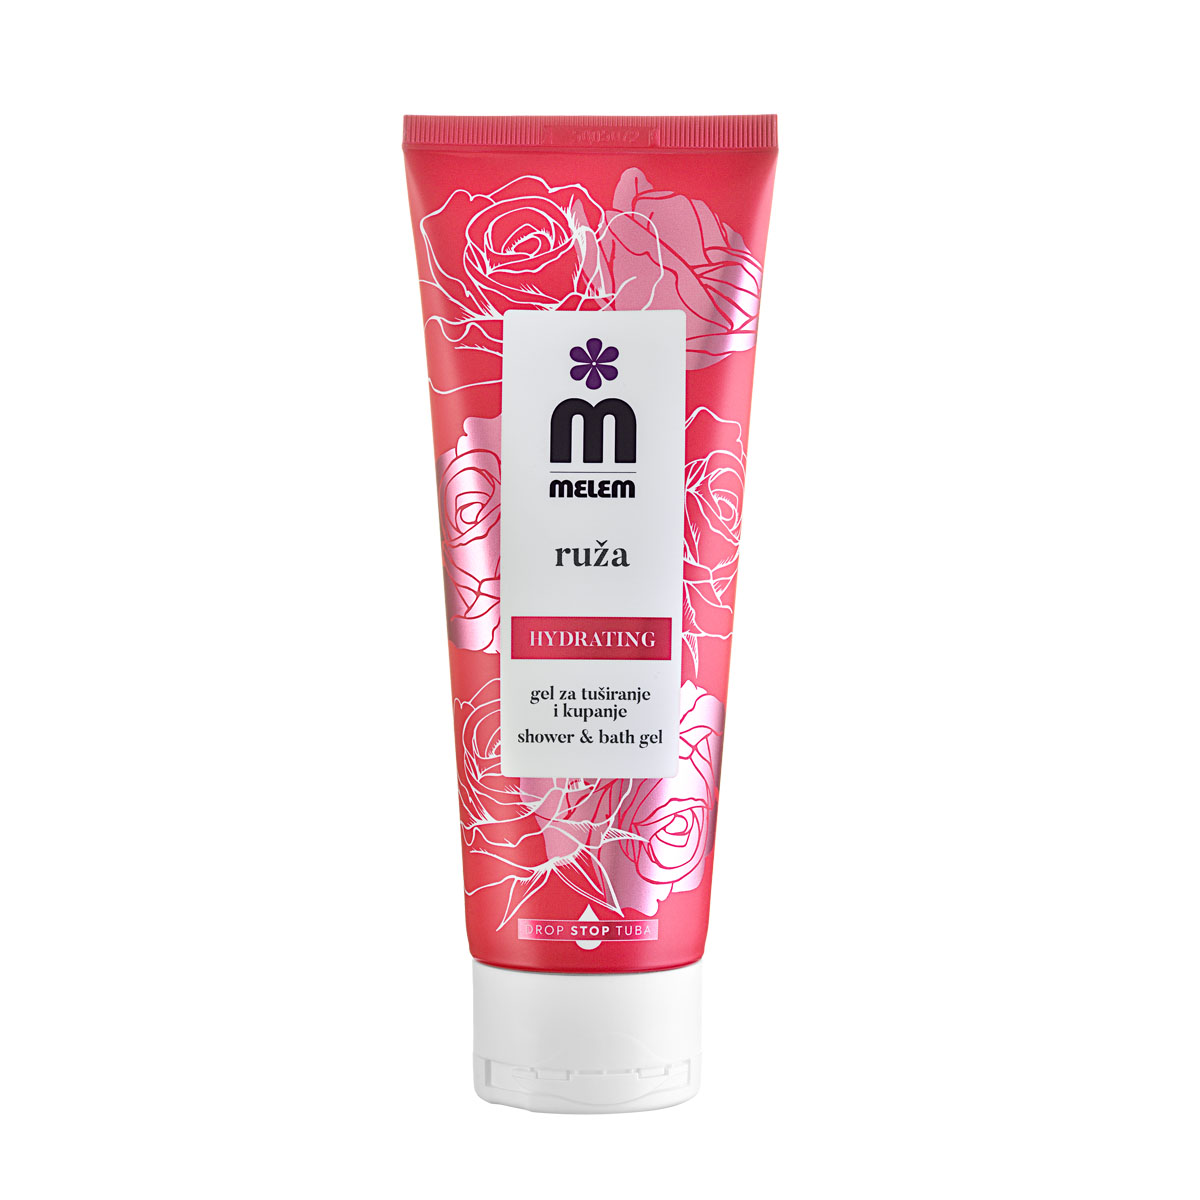 Melem shower & bath gel with rose 250 ml